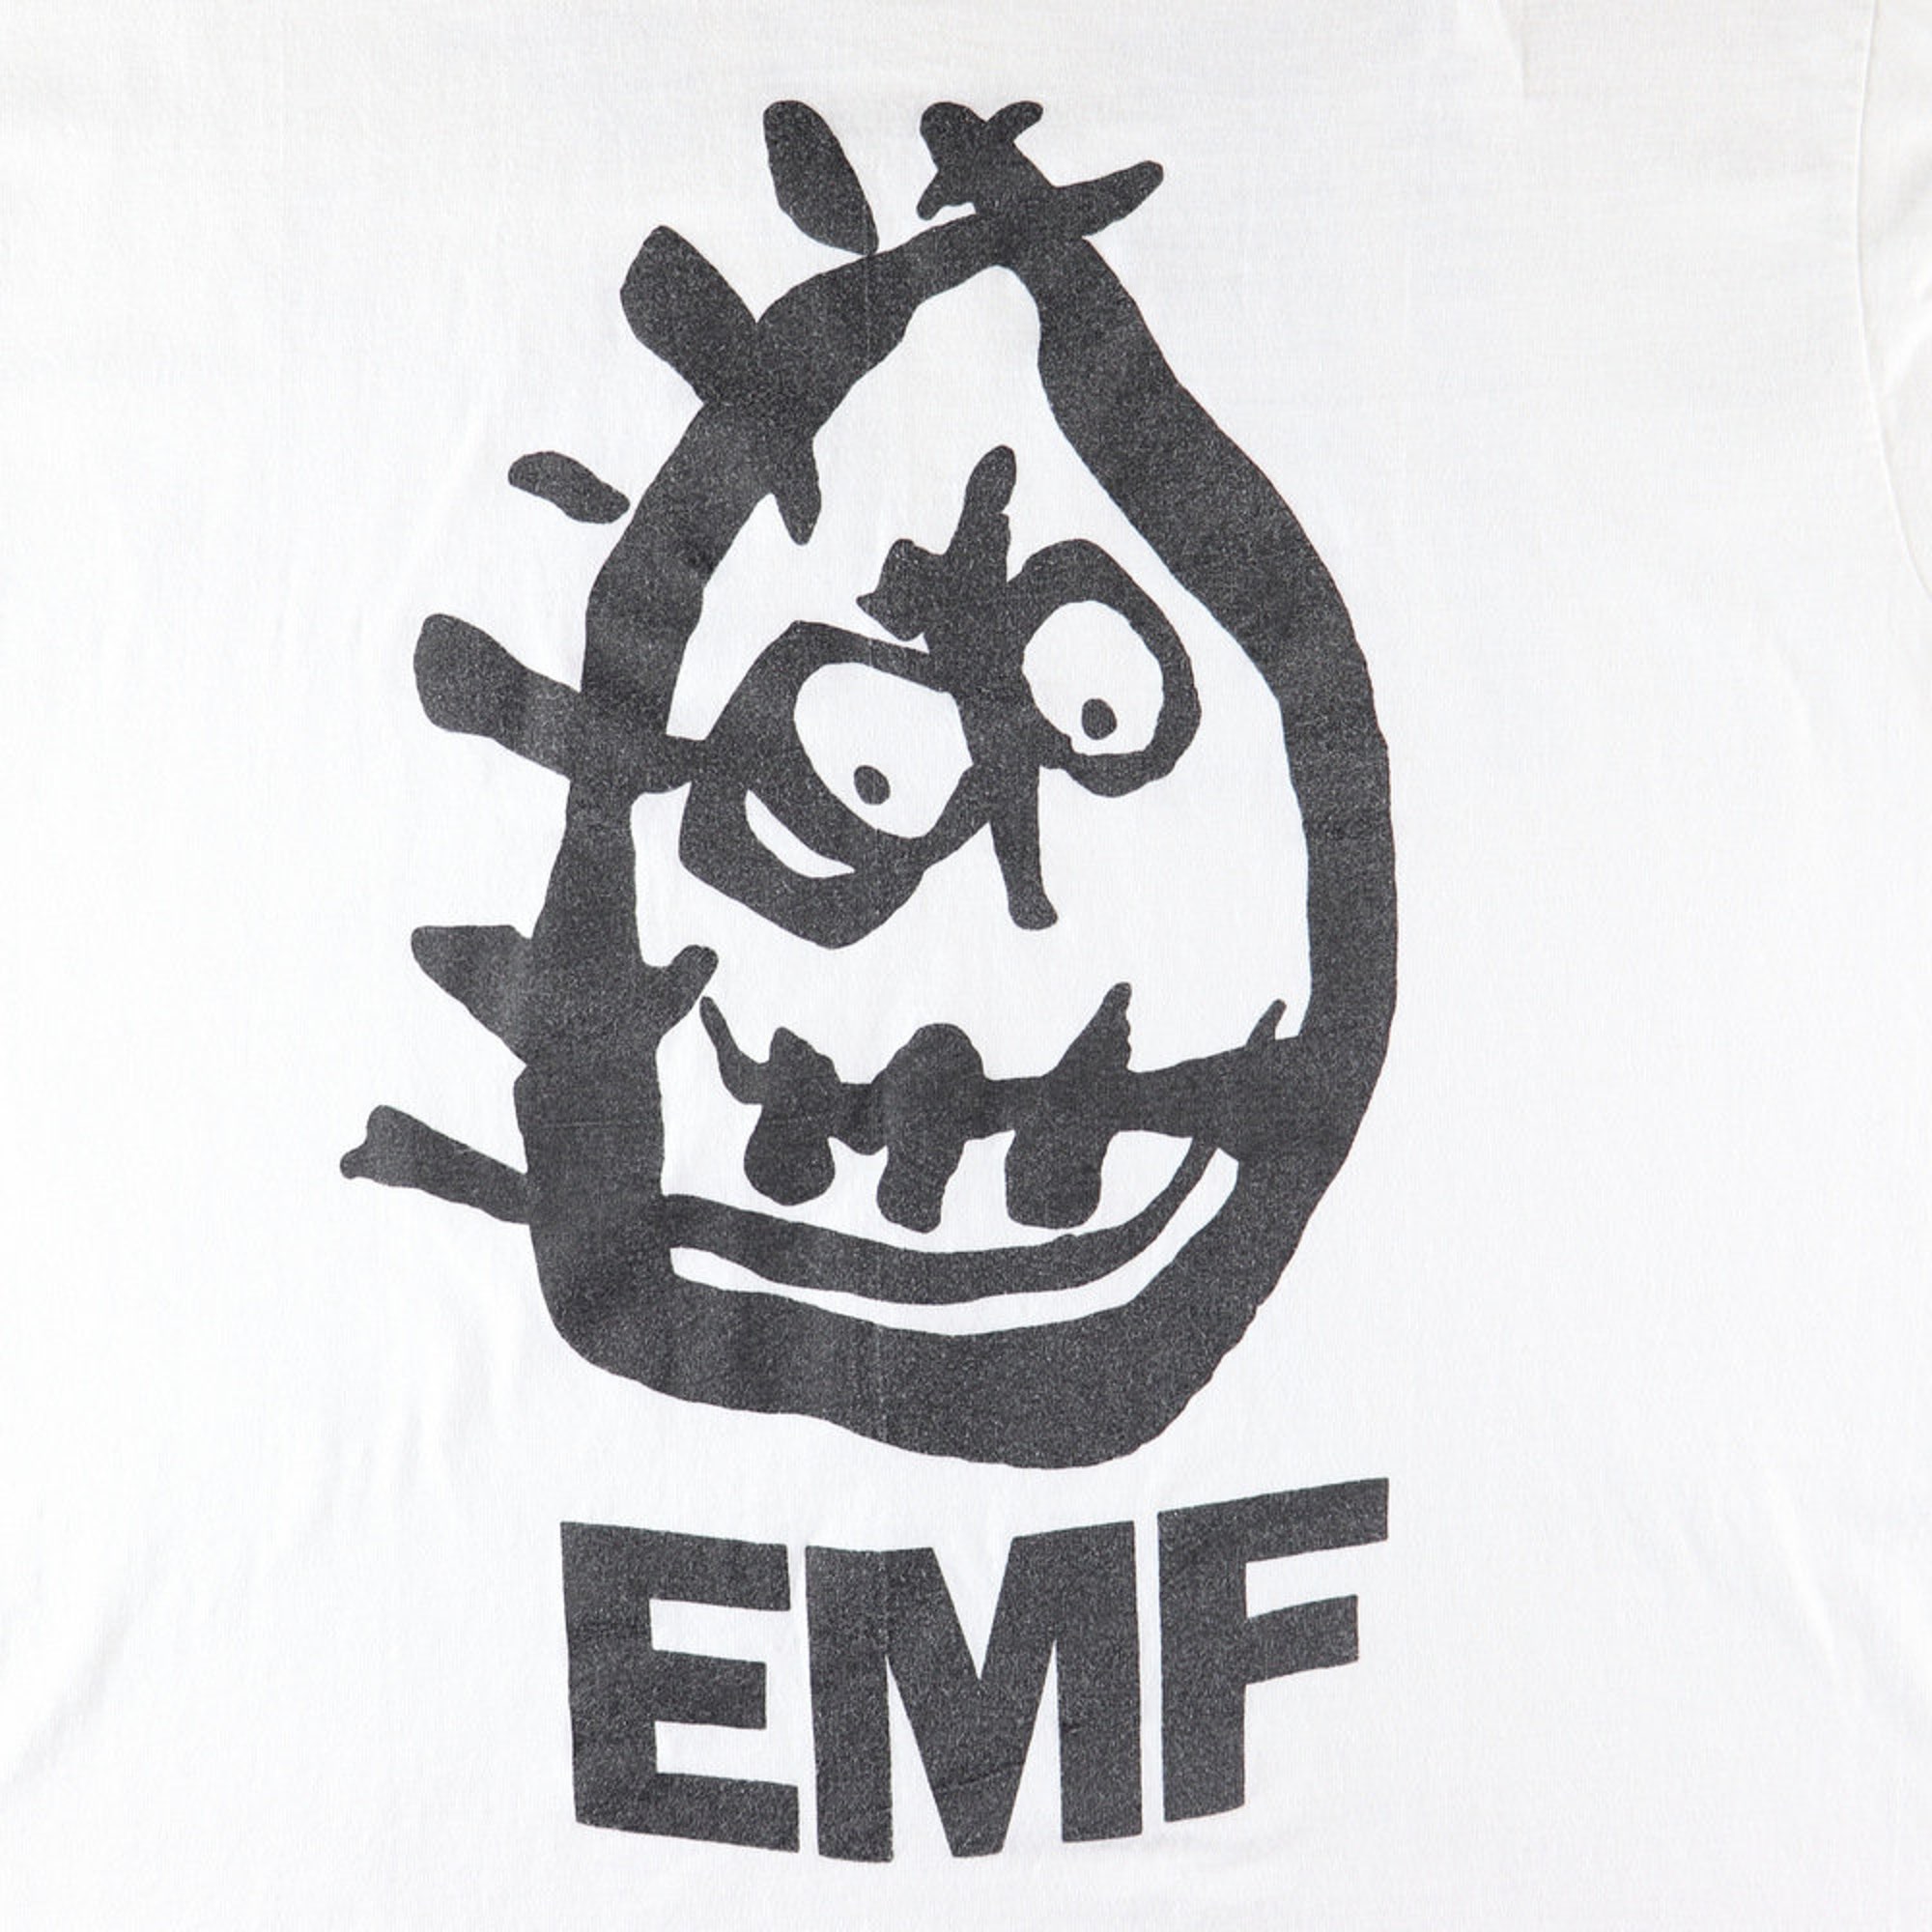 Discover vintage 1991 EMF North American Tour Shirt